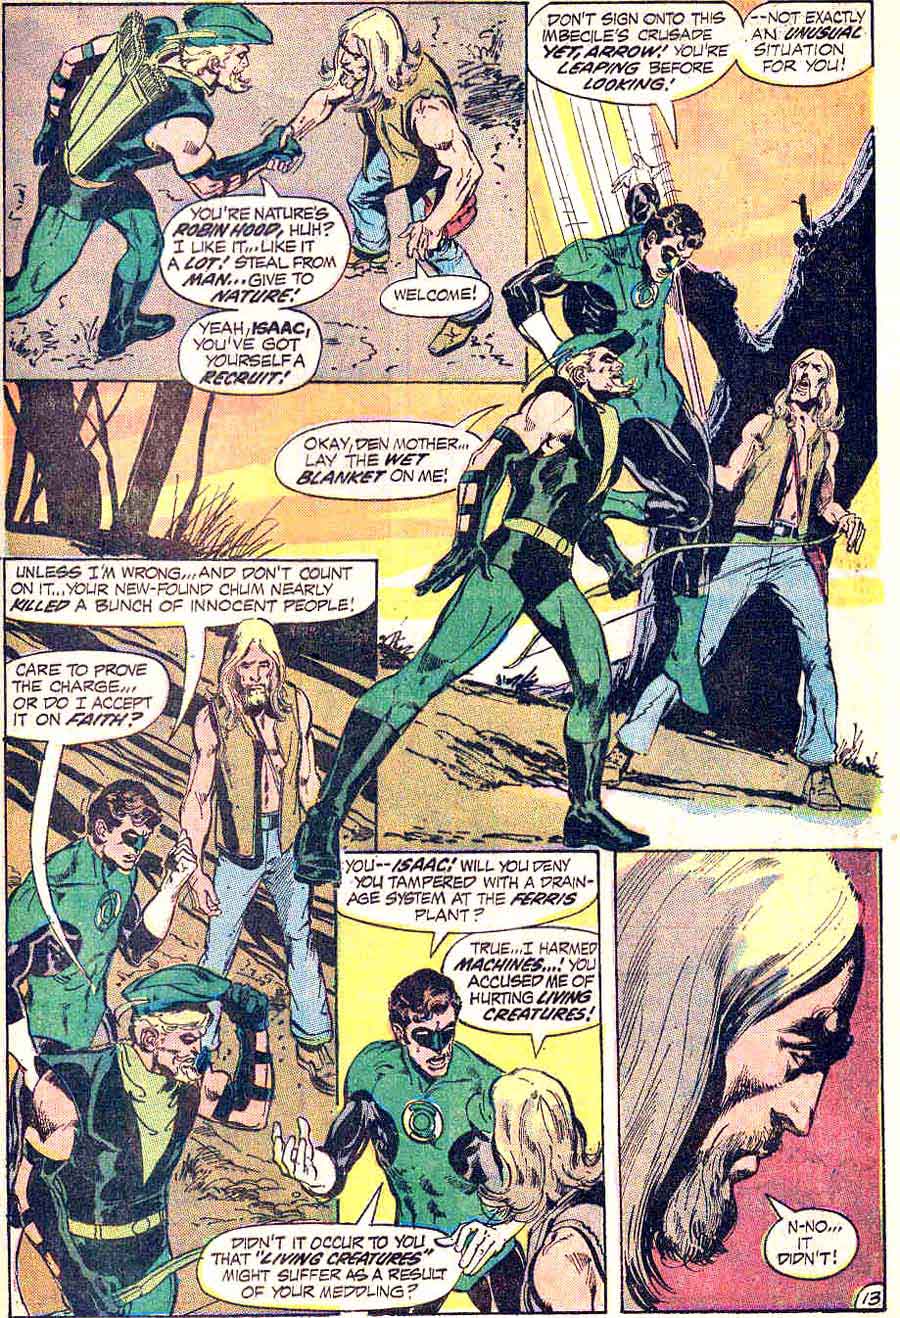 Green Lantern Green Arrow #89 bronze age 1970s dc comic book page art by Neal Adams